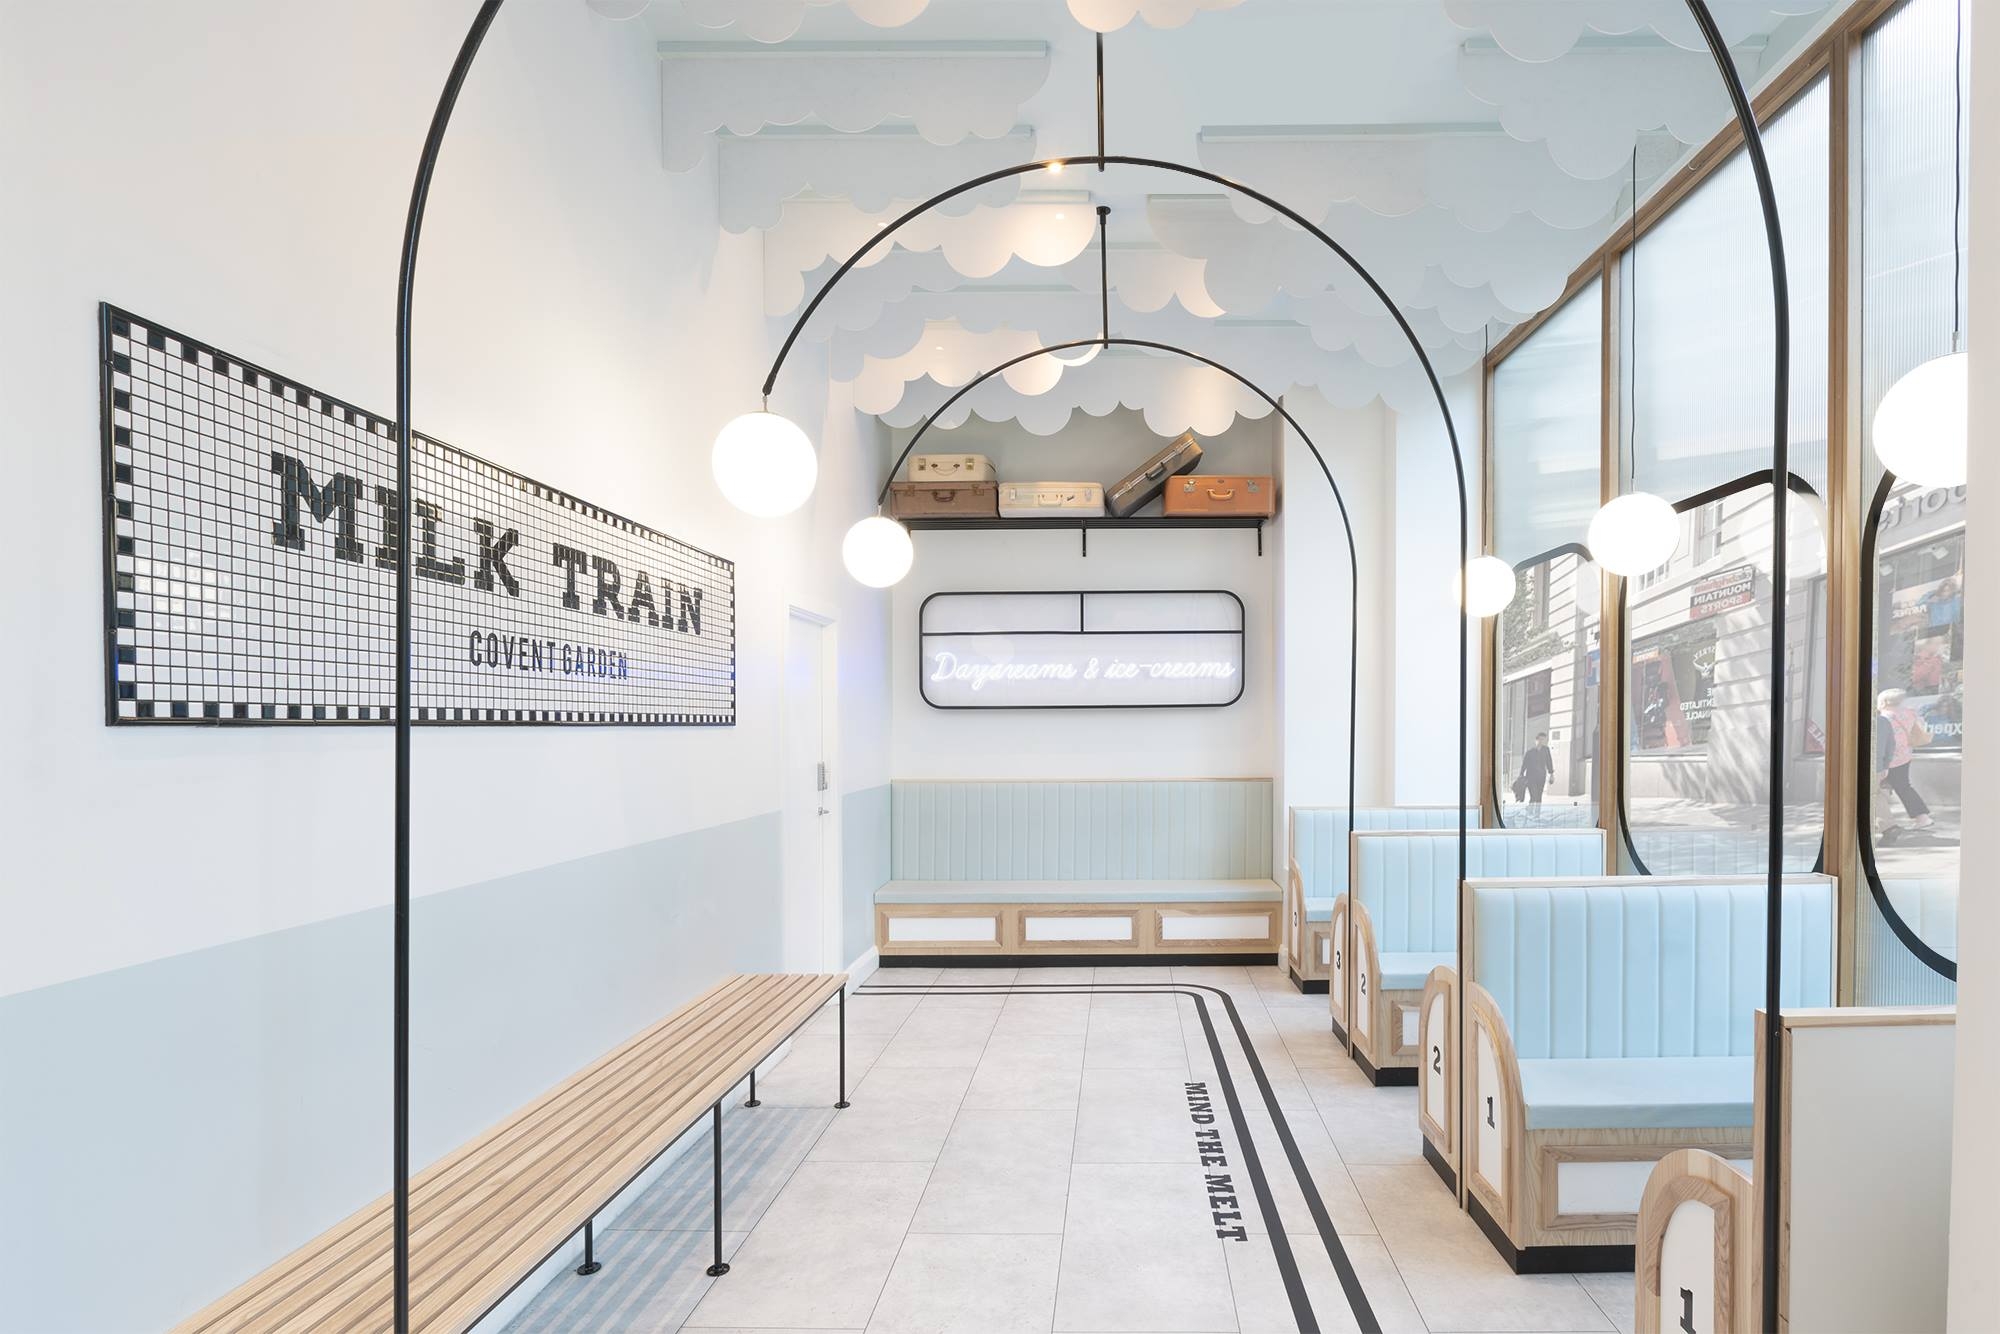 Milk Train Art Deco interior by FormRoom